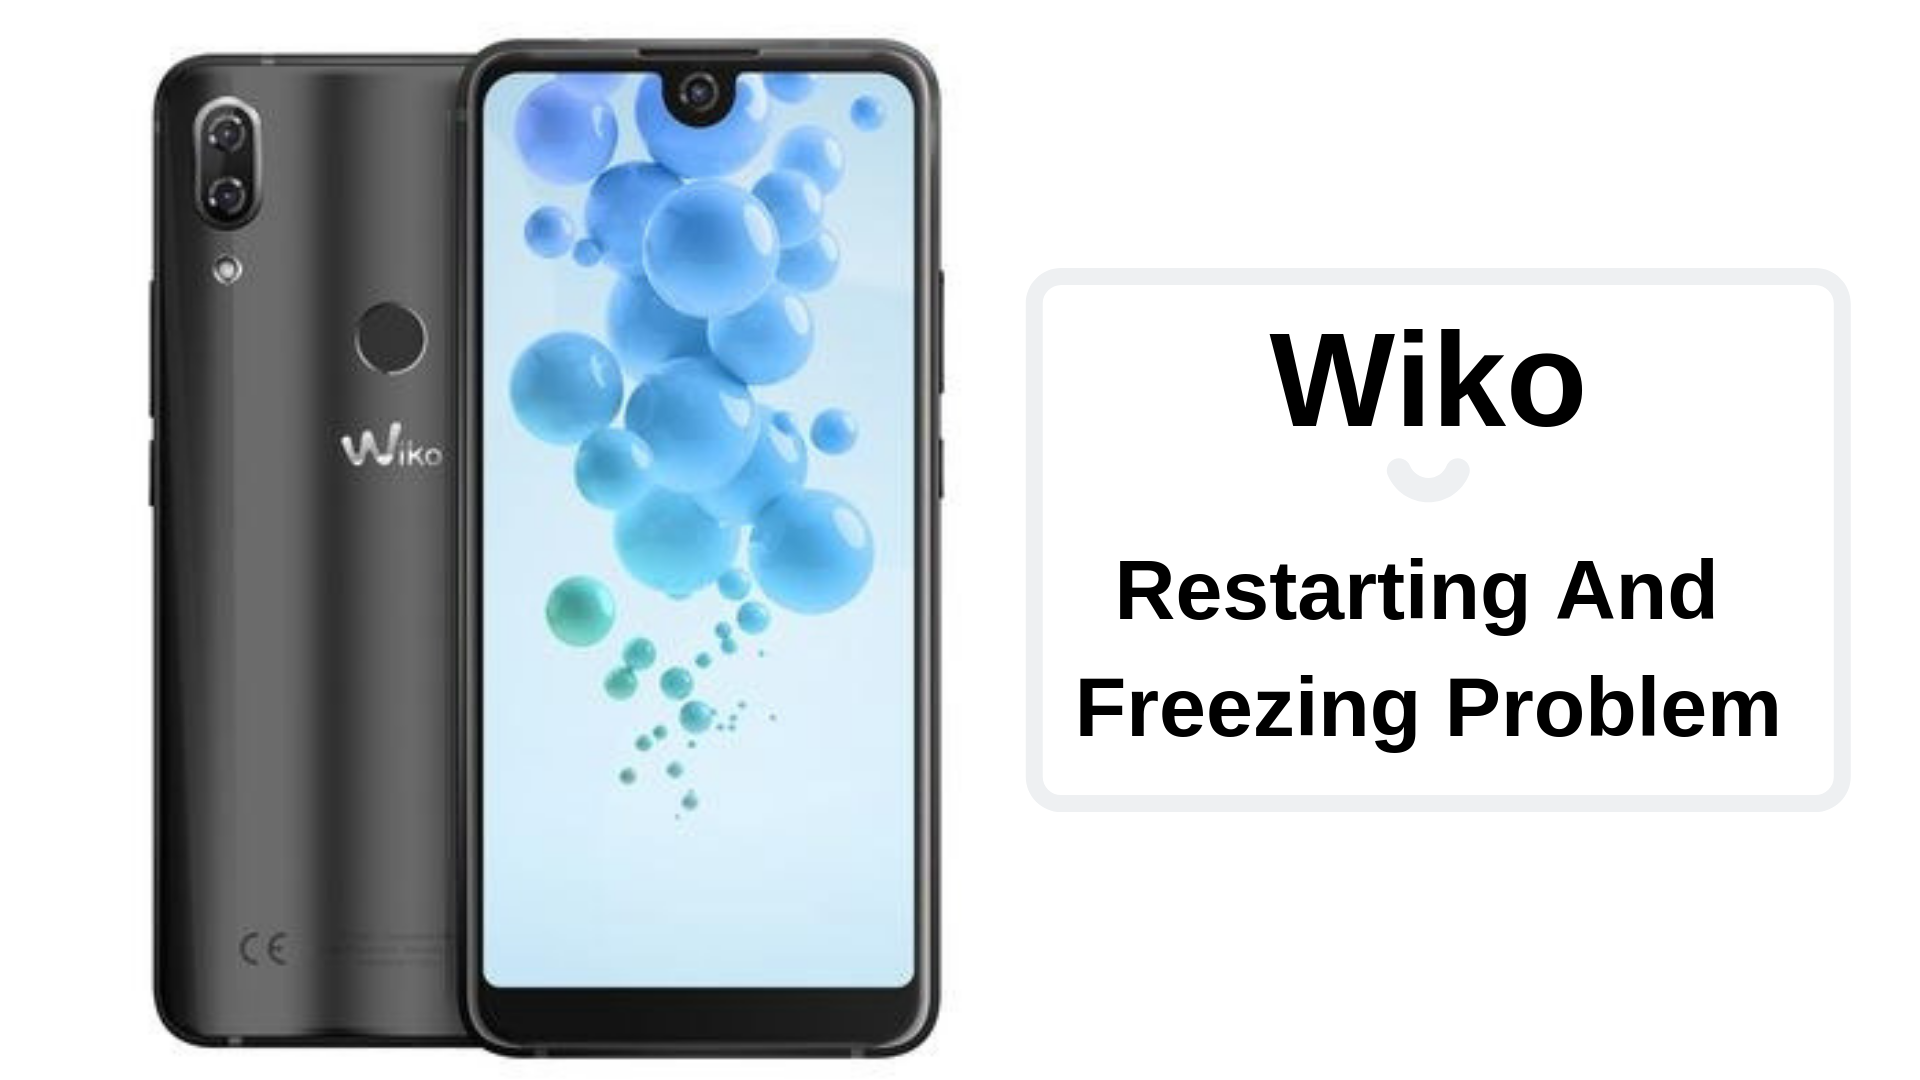 Restarting And Freezing Problem